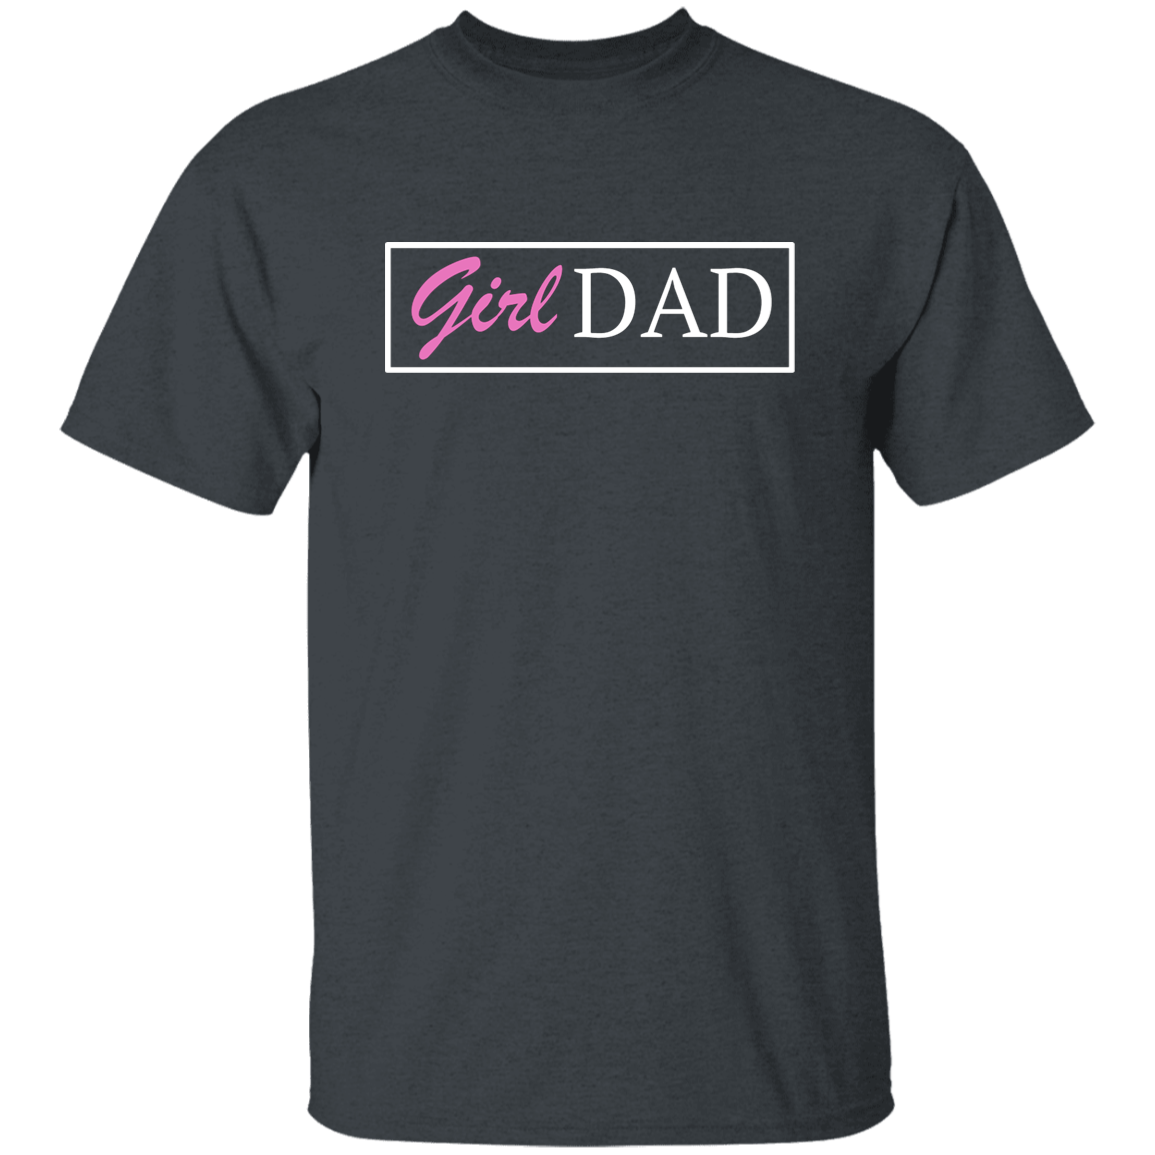 Mens - "Girl Dad" Matching Shirt